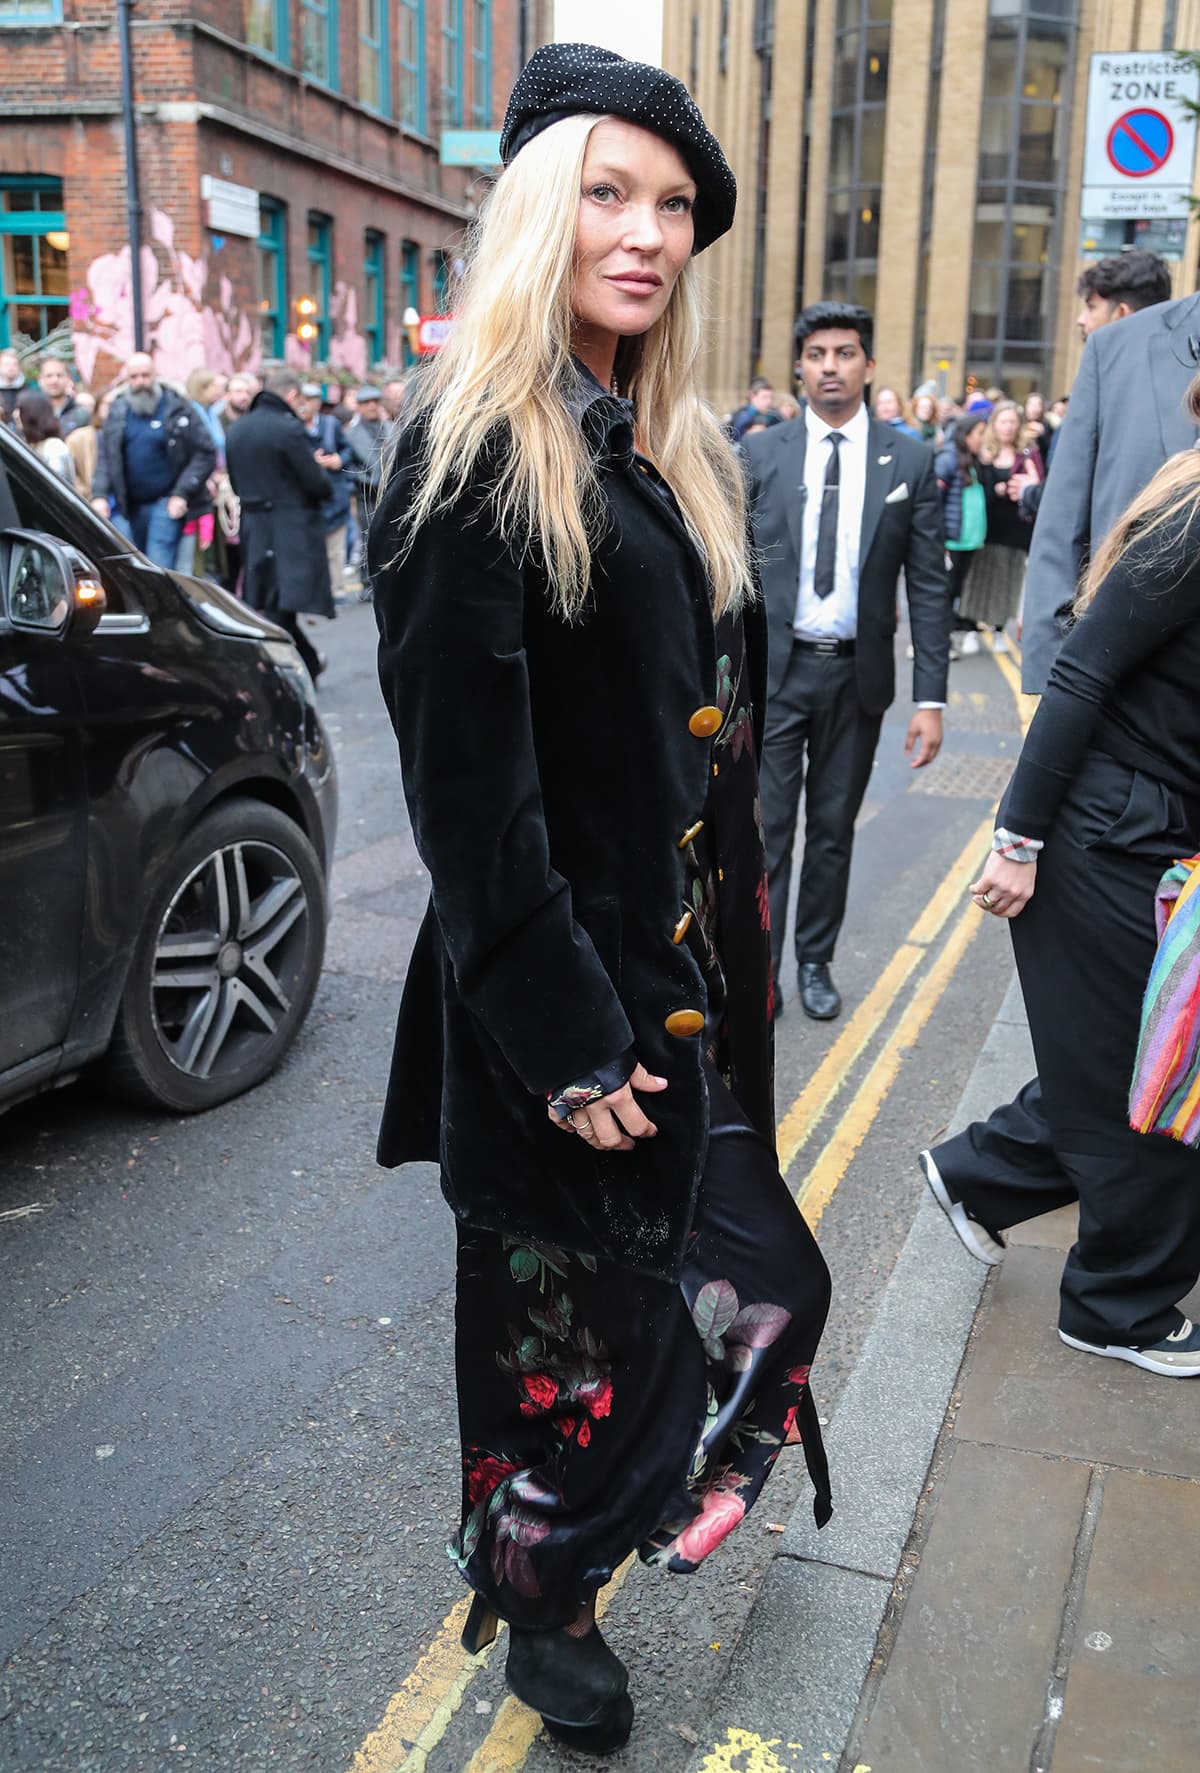 Kate Moss honors Vivienne Westwood in a black floral dress, a velvet coat, and platform heels